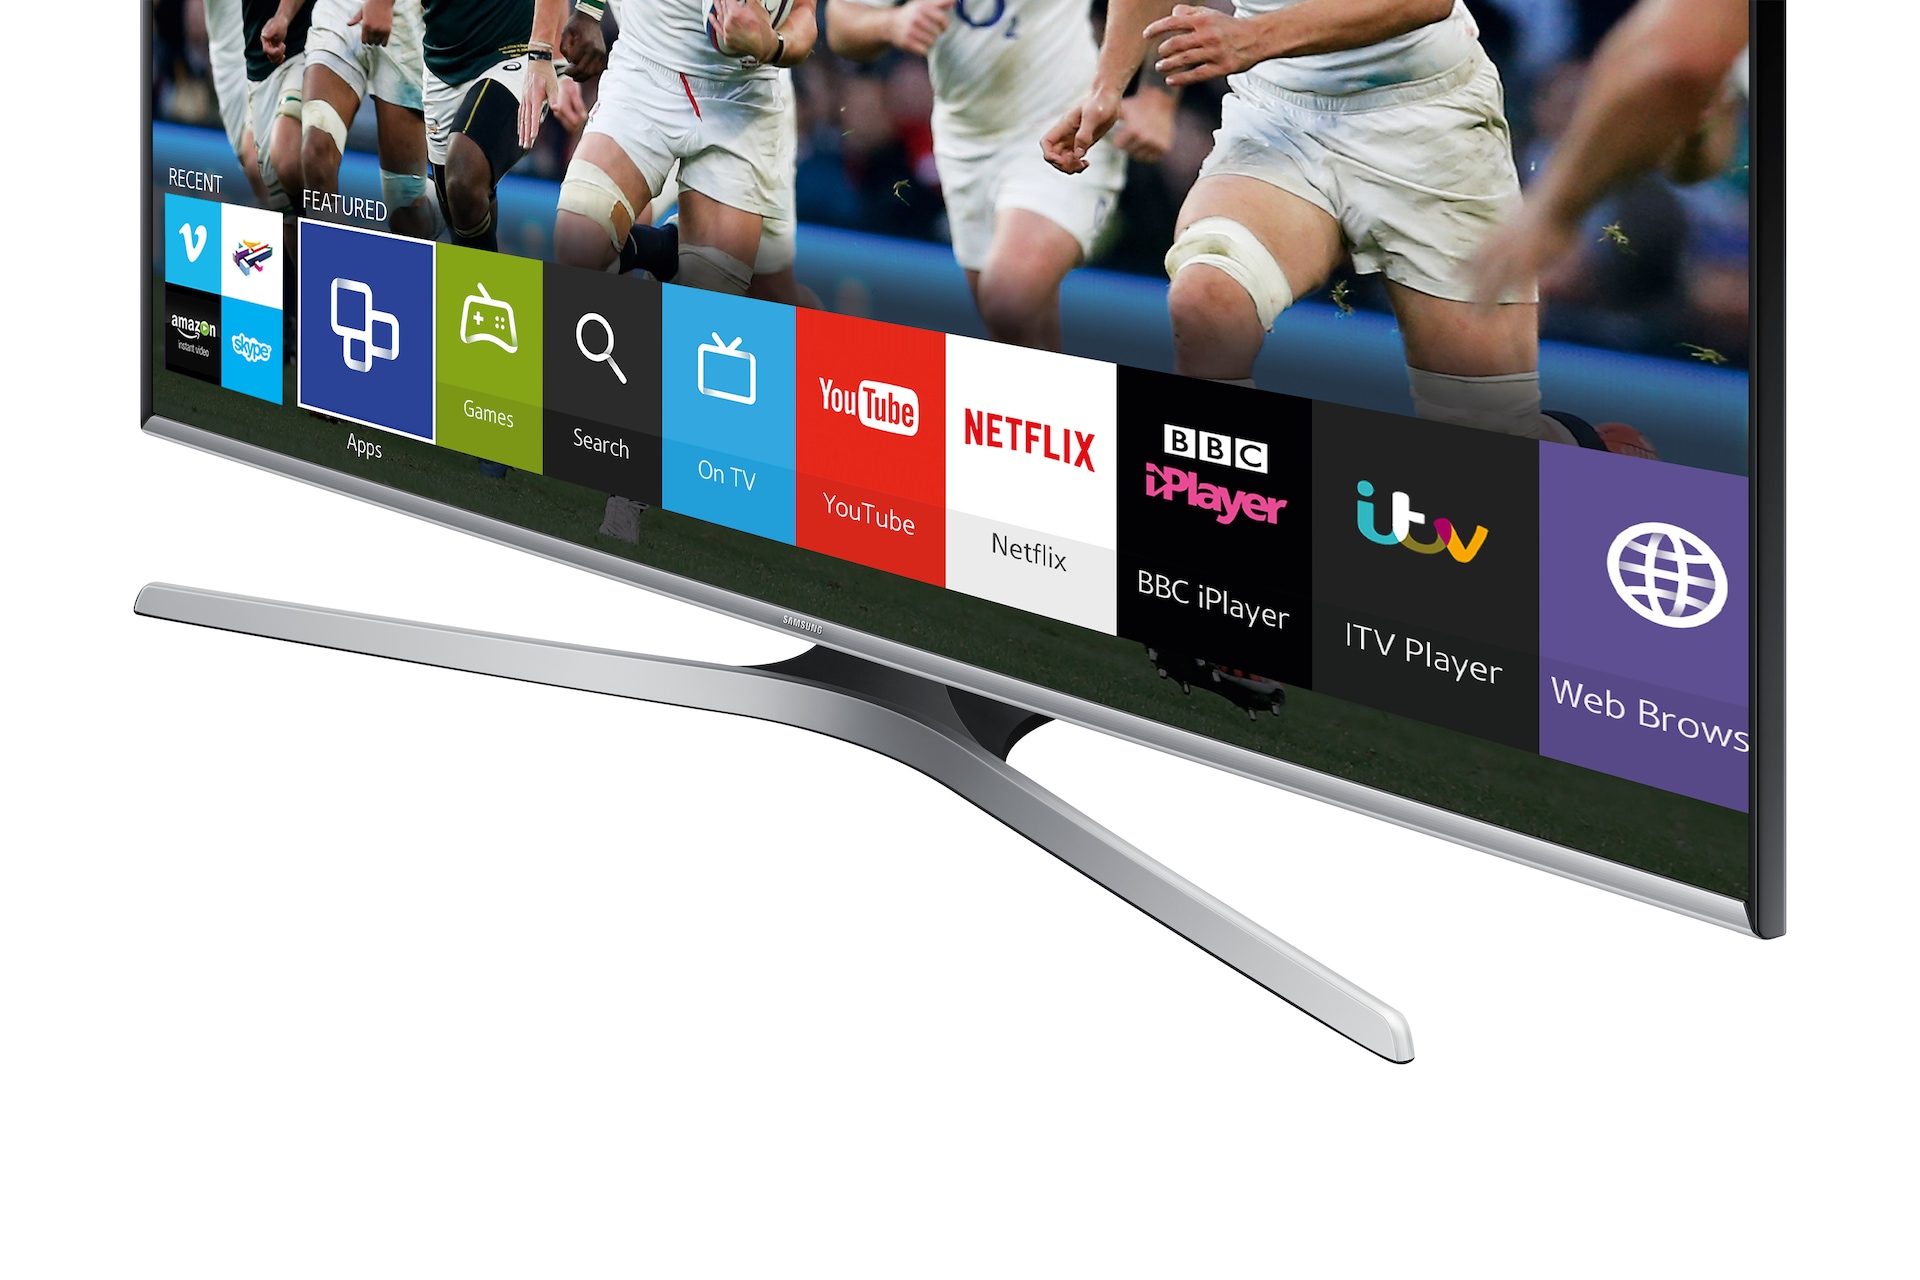 Samsung 48-inch J5500 Series 5 Full HD Smart LED TV | Samsung Ireland